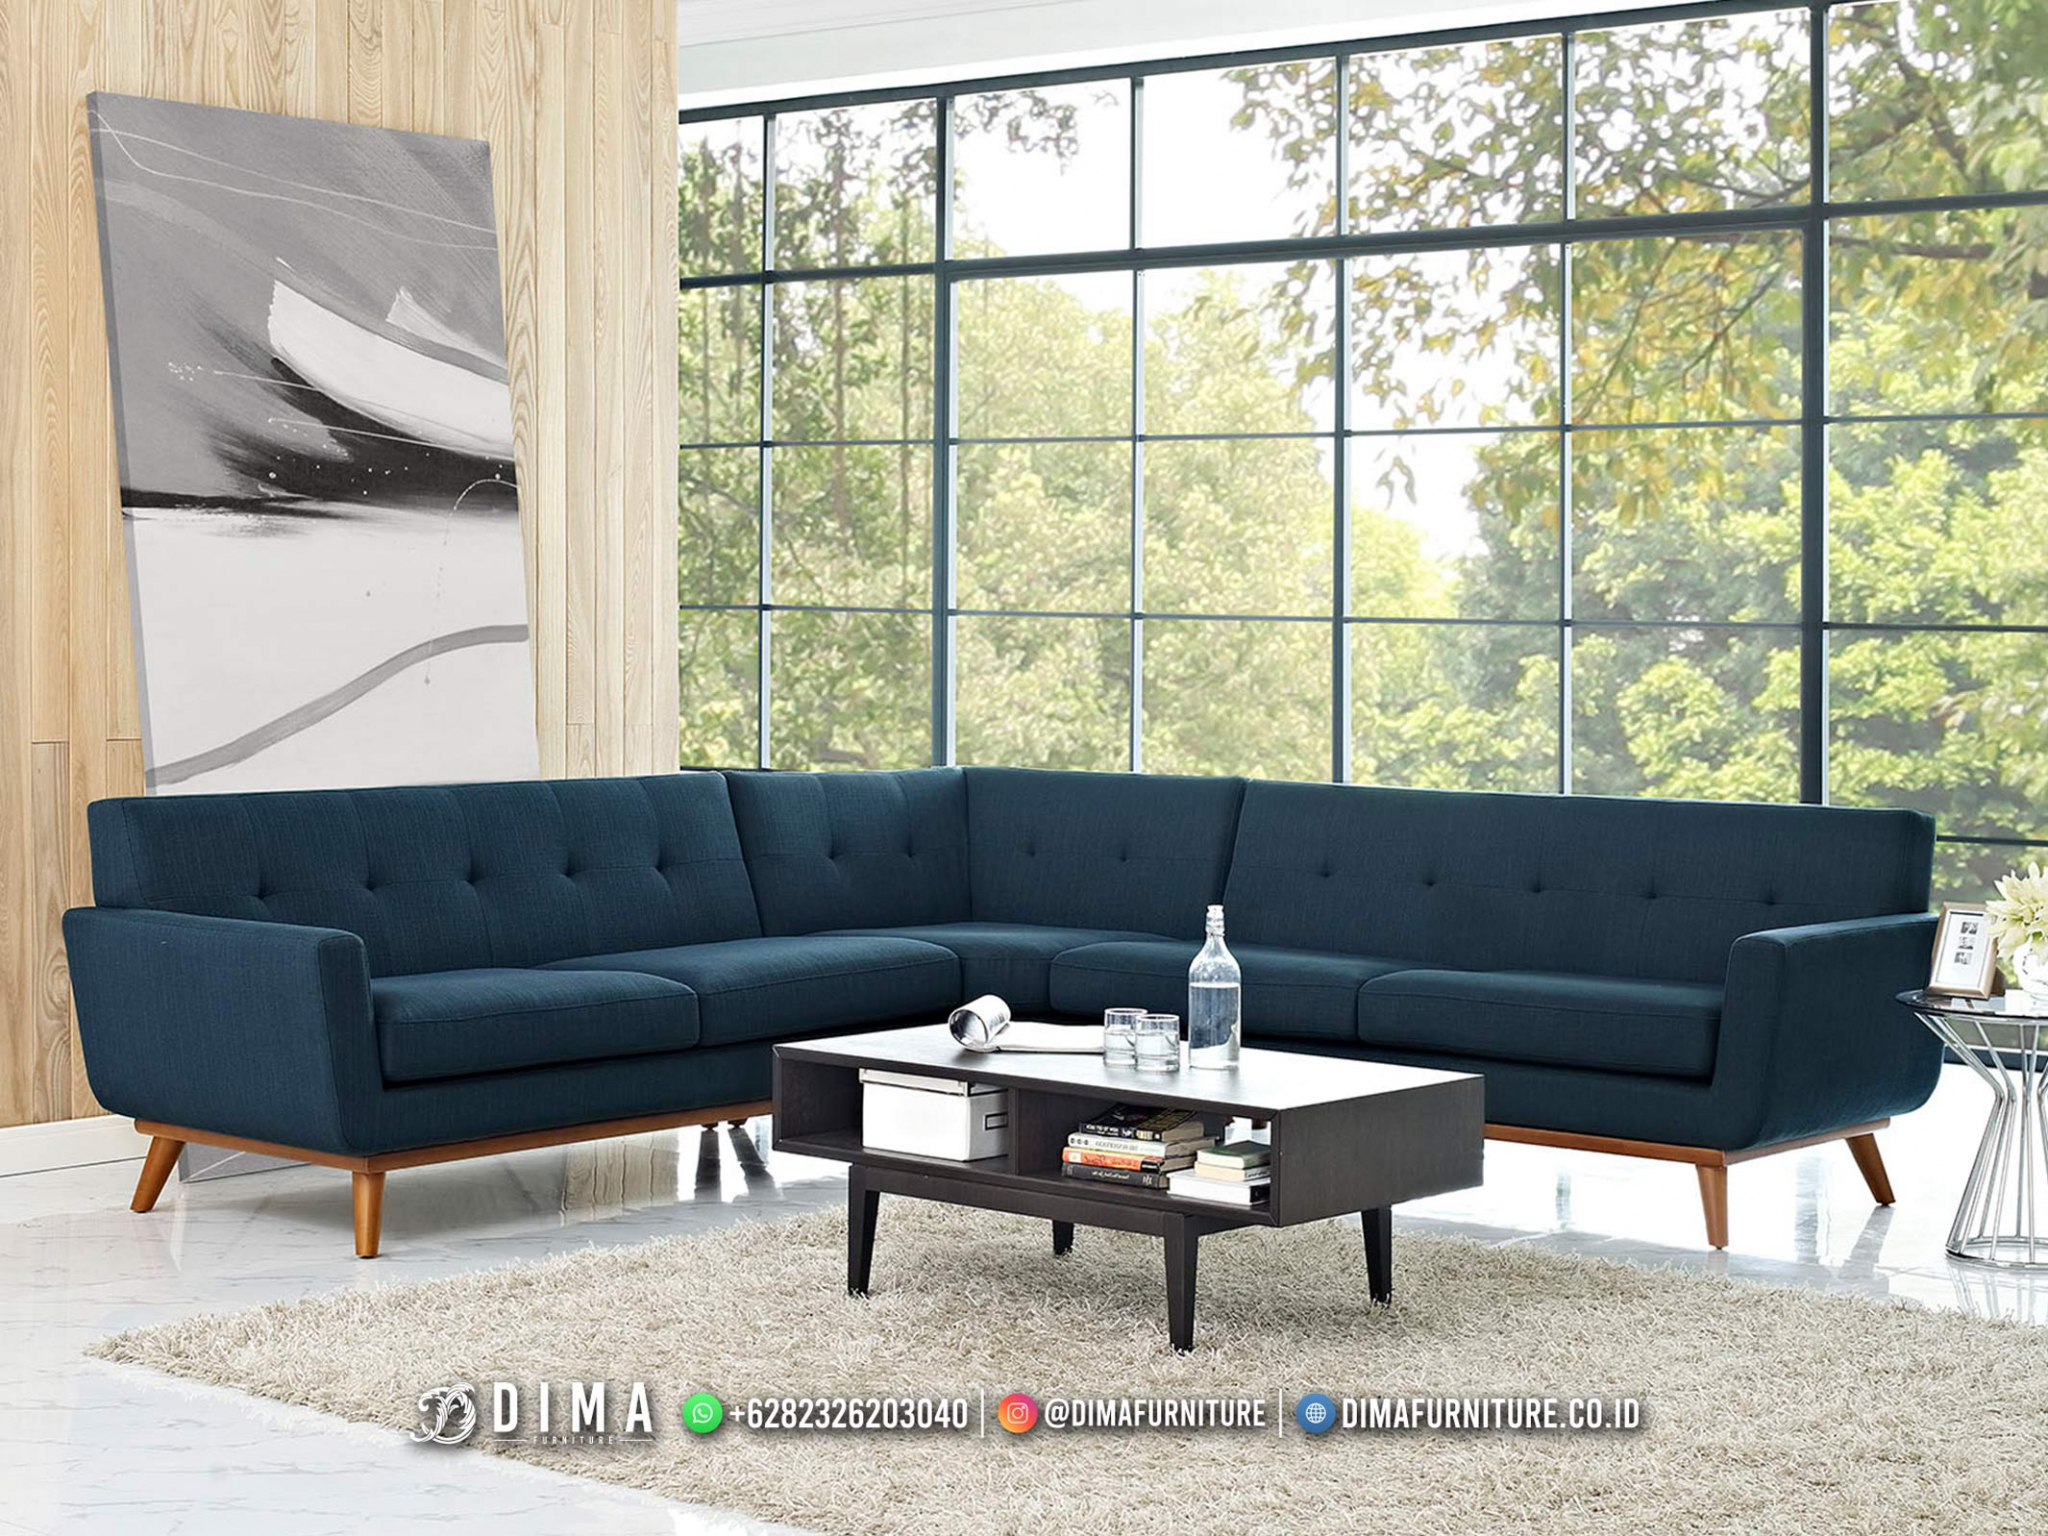 Harga Jual Sofa Ruang Tamu Minimalis Terbaru Sofa Sudut Jepara BM147